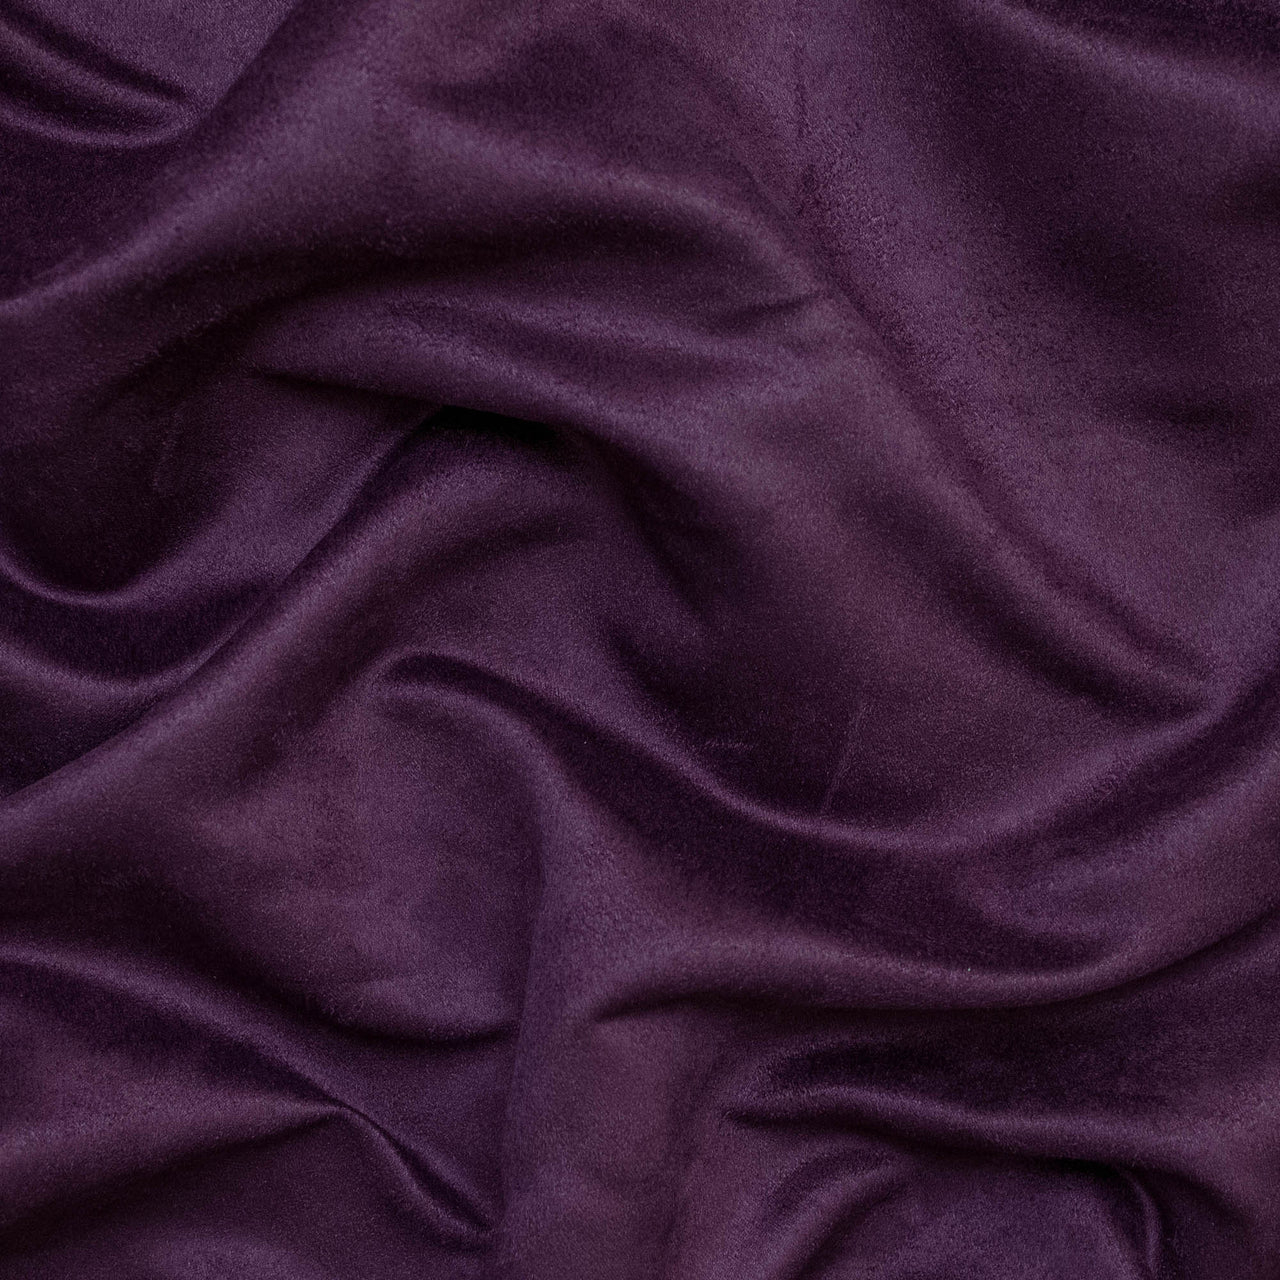 Purple - Premium Faux Suede for Car Interior, Interior Design, Upholstery & Soft Furnishings